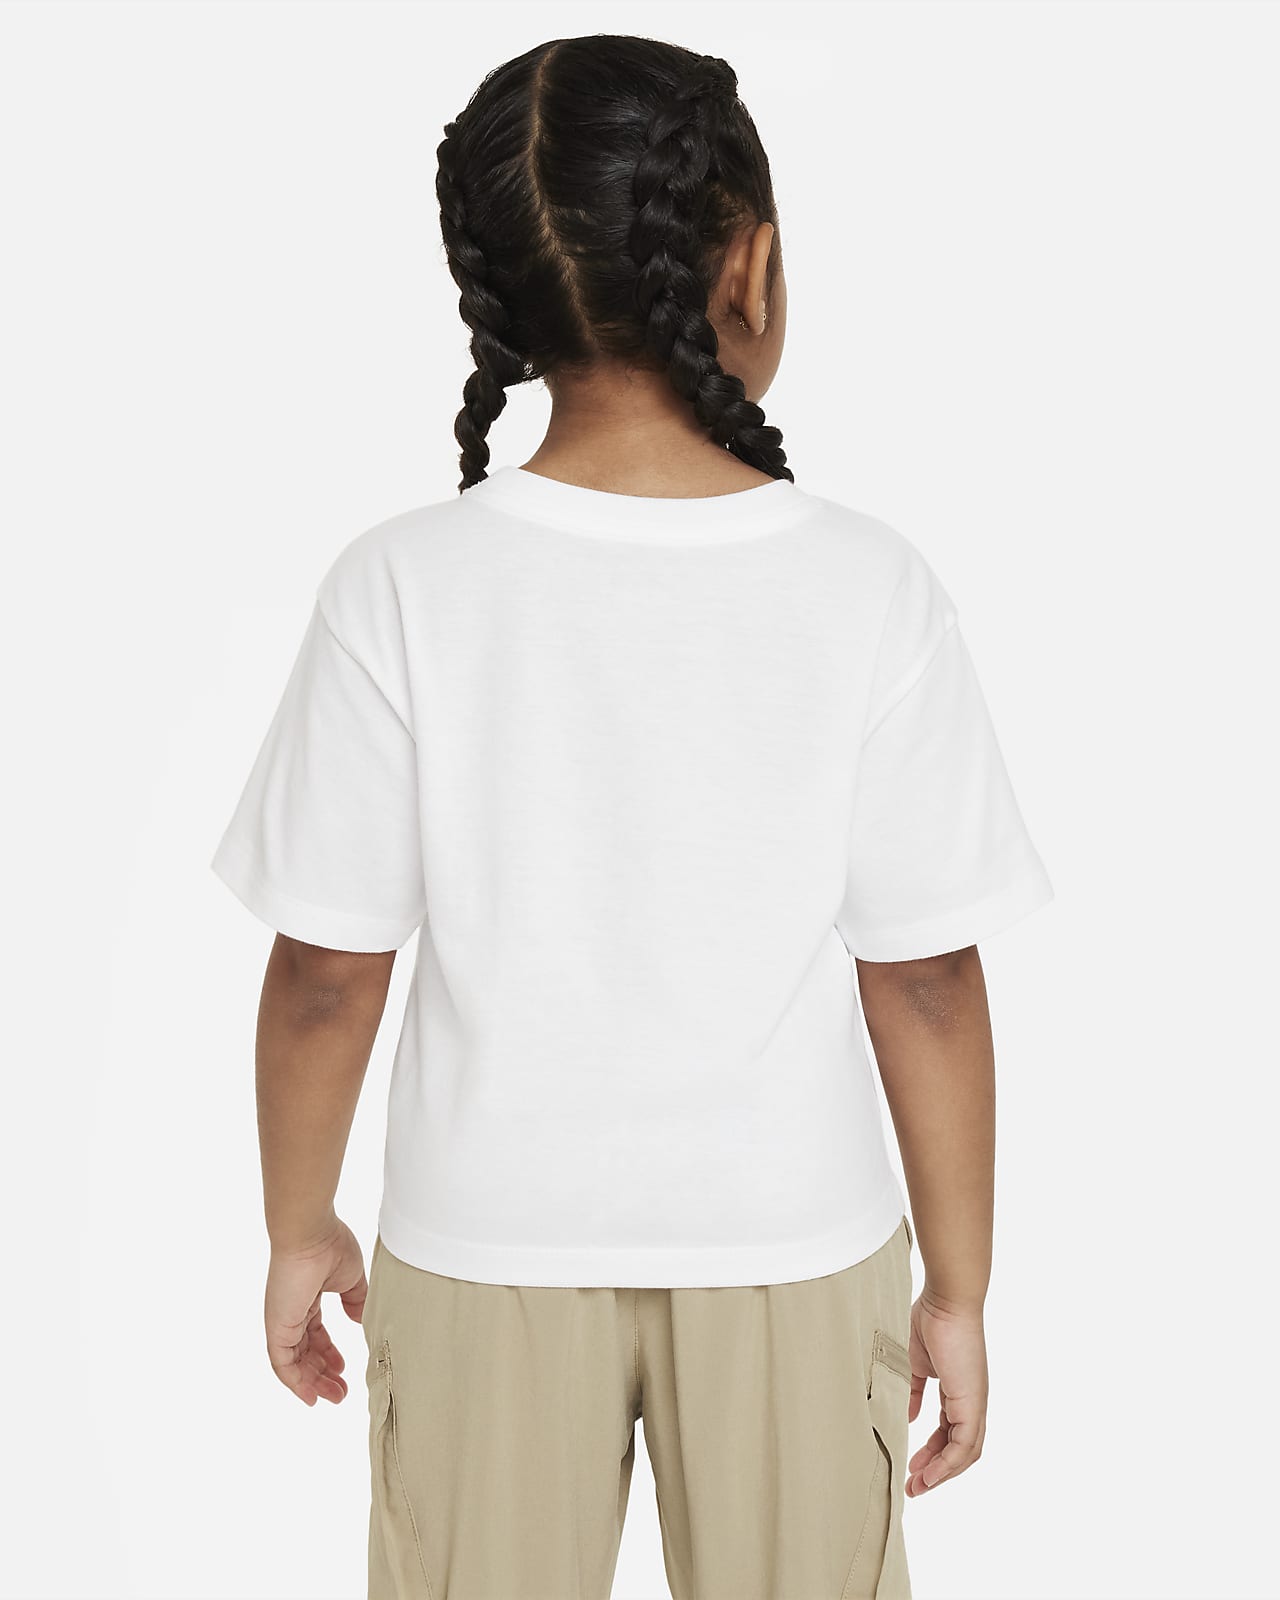 Nike Sport Little Kids T-Shirt.